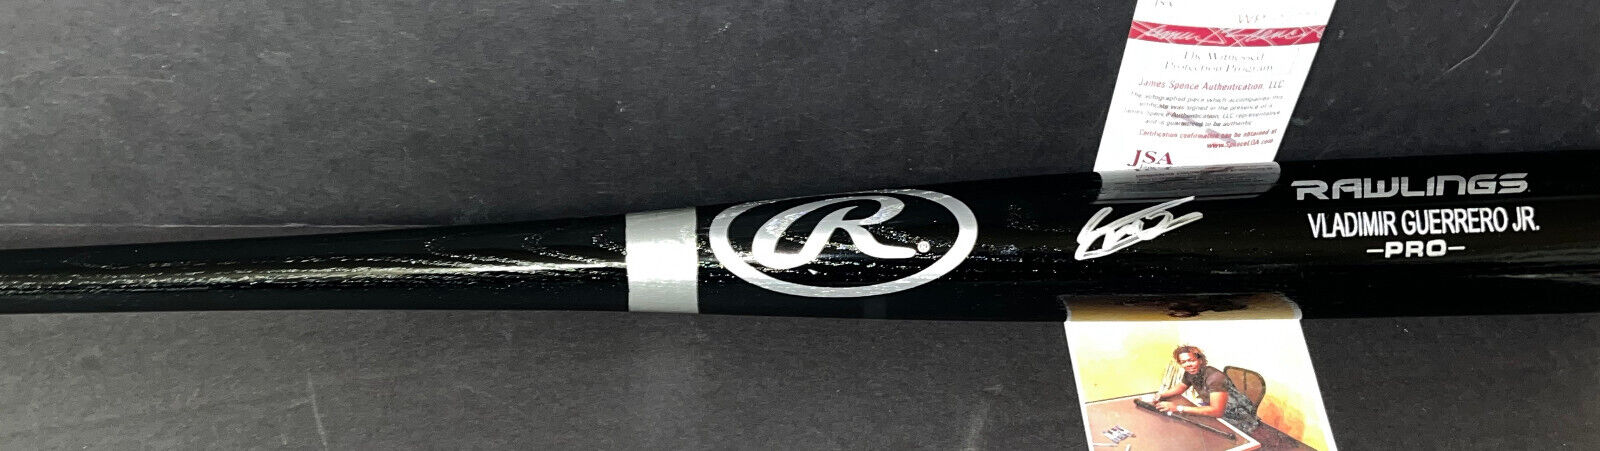 Vladimir Guerrero Jr Blue Jays Signed Engraved Bat JSA WITNESS COA Black